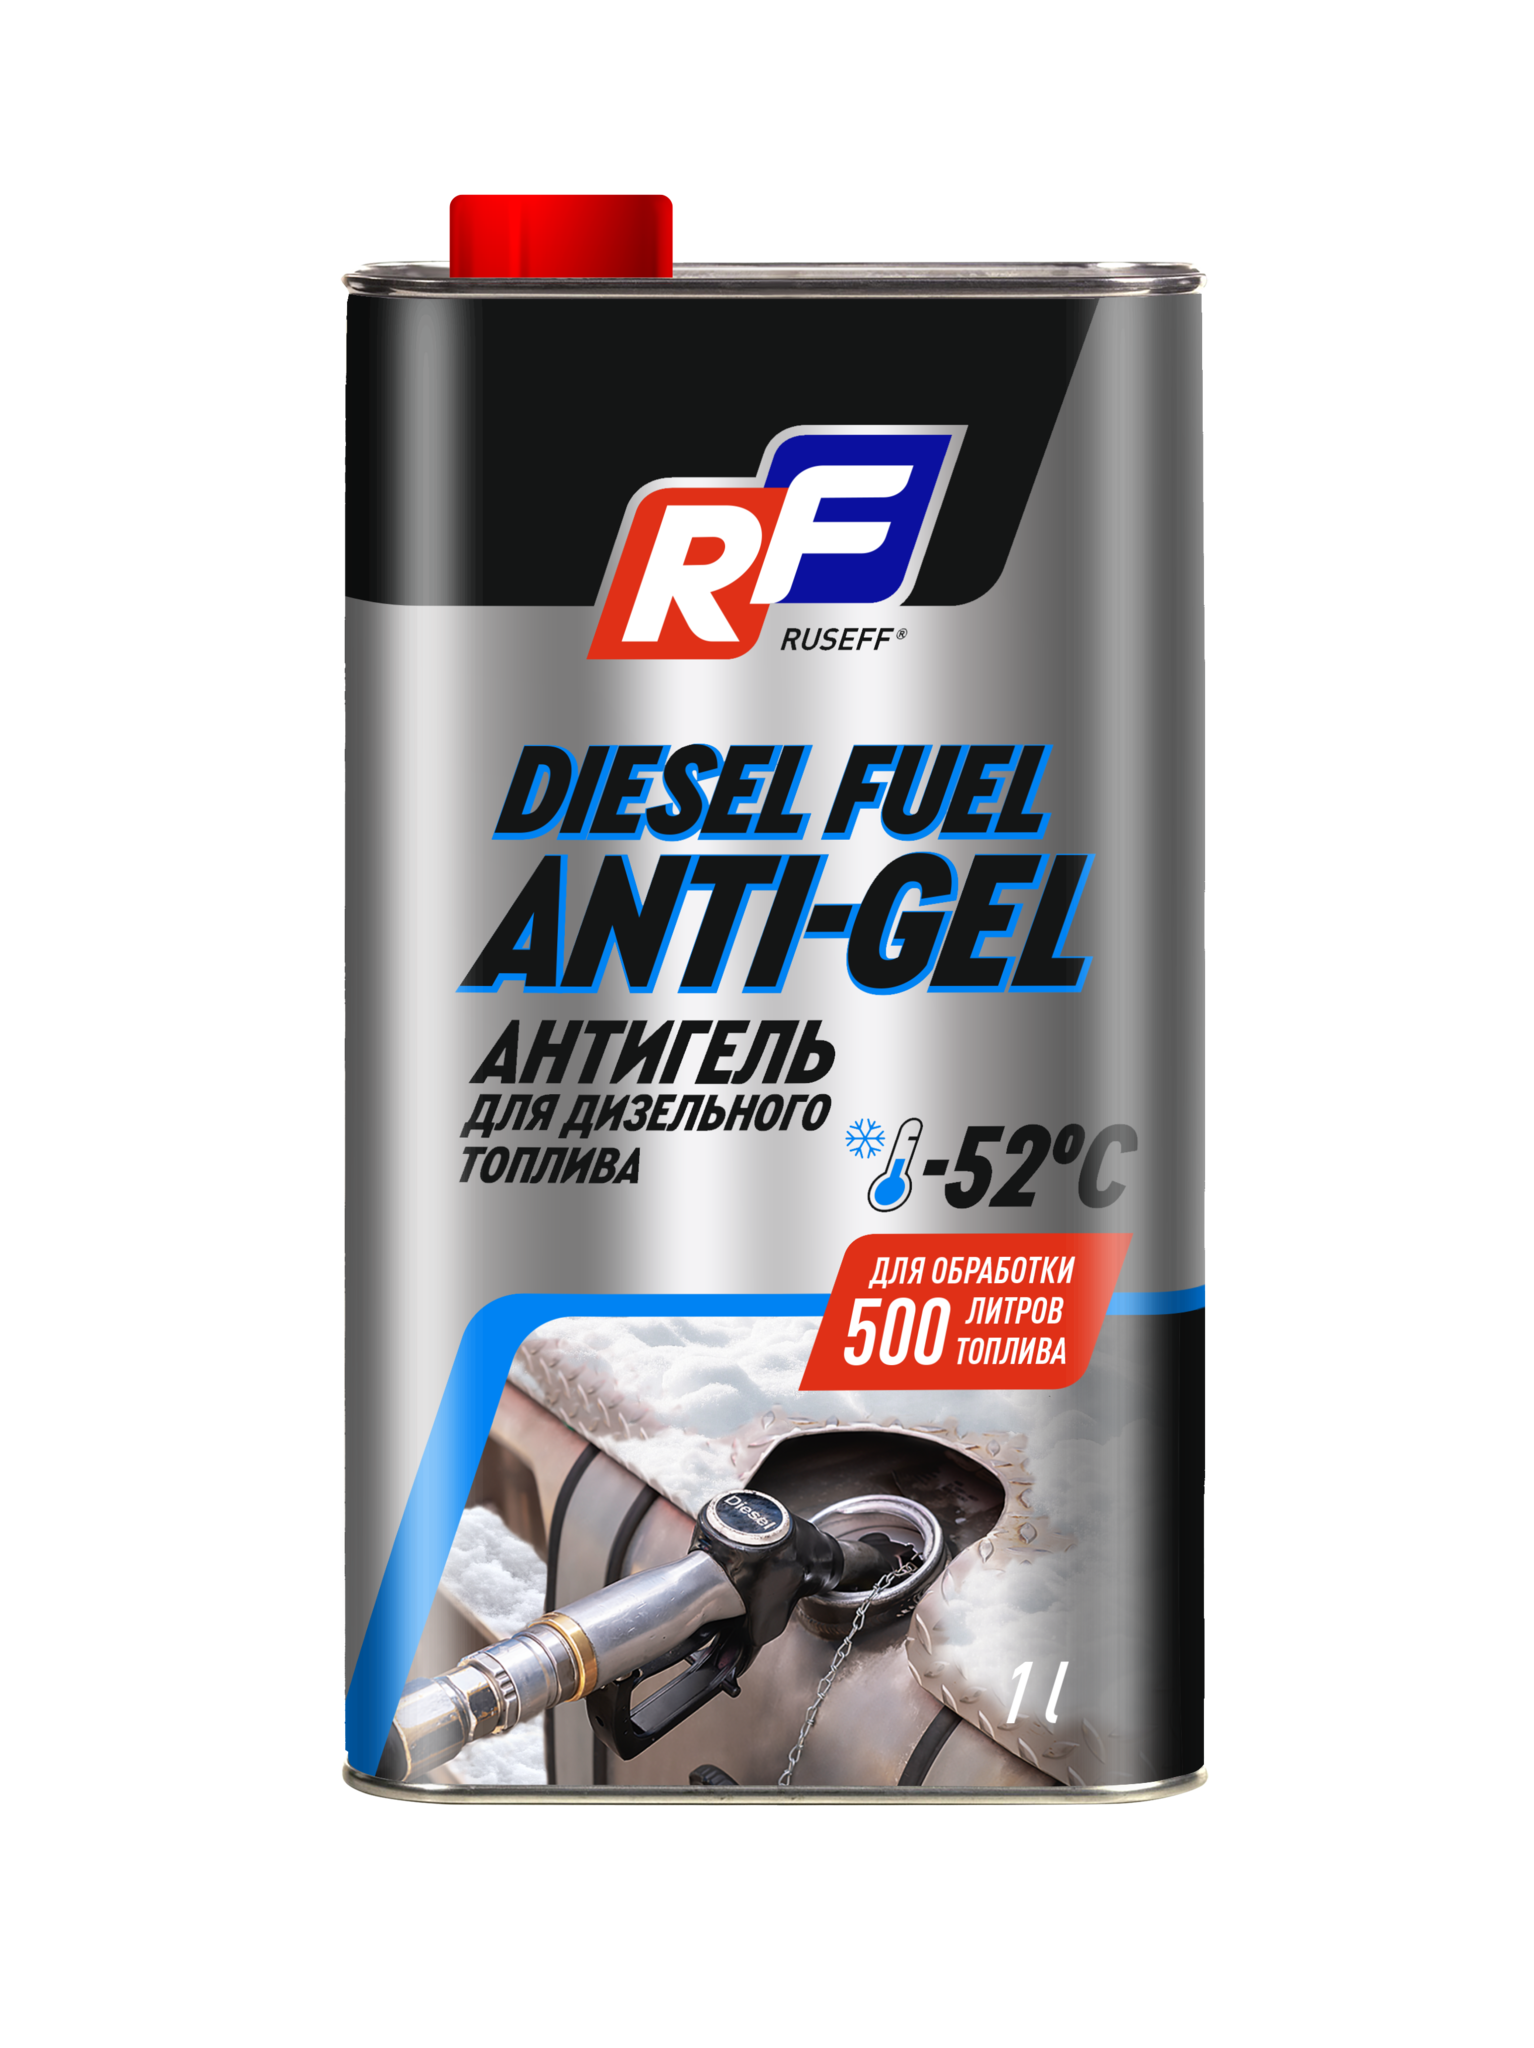 Fuel ox anti gel